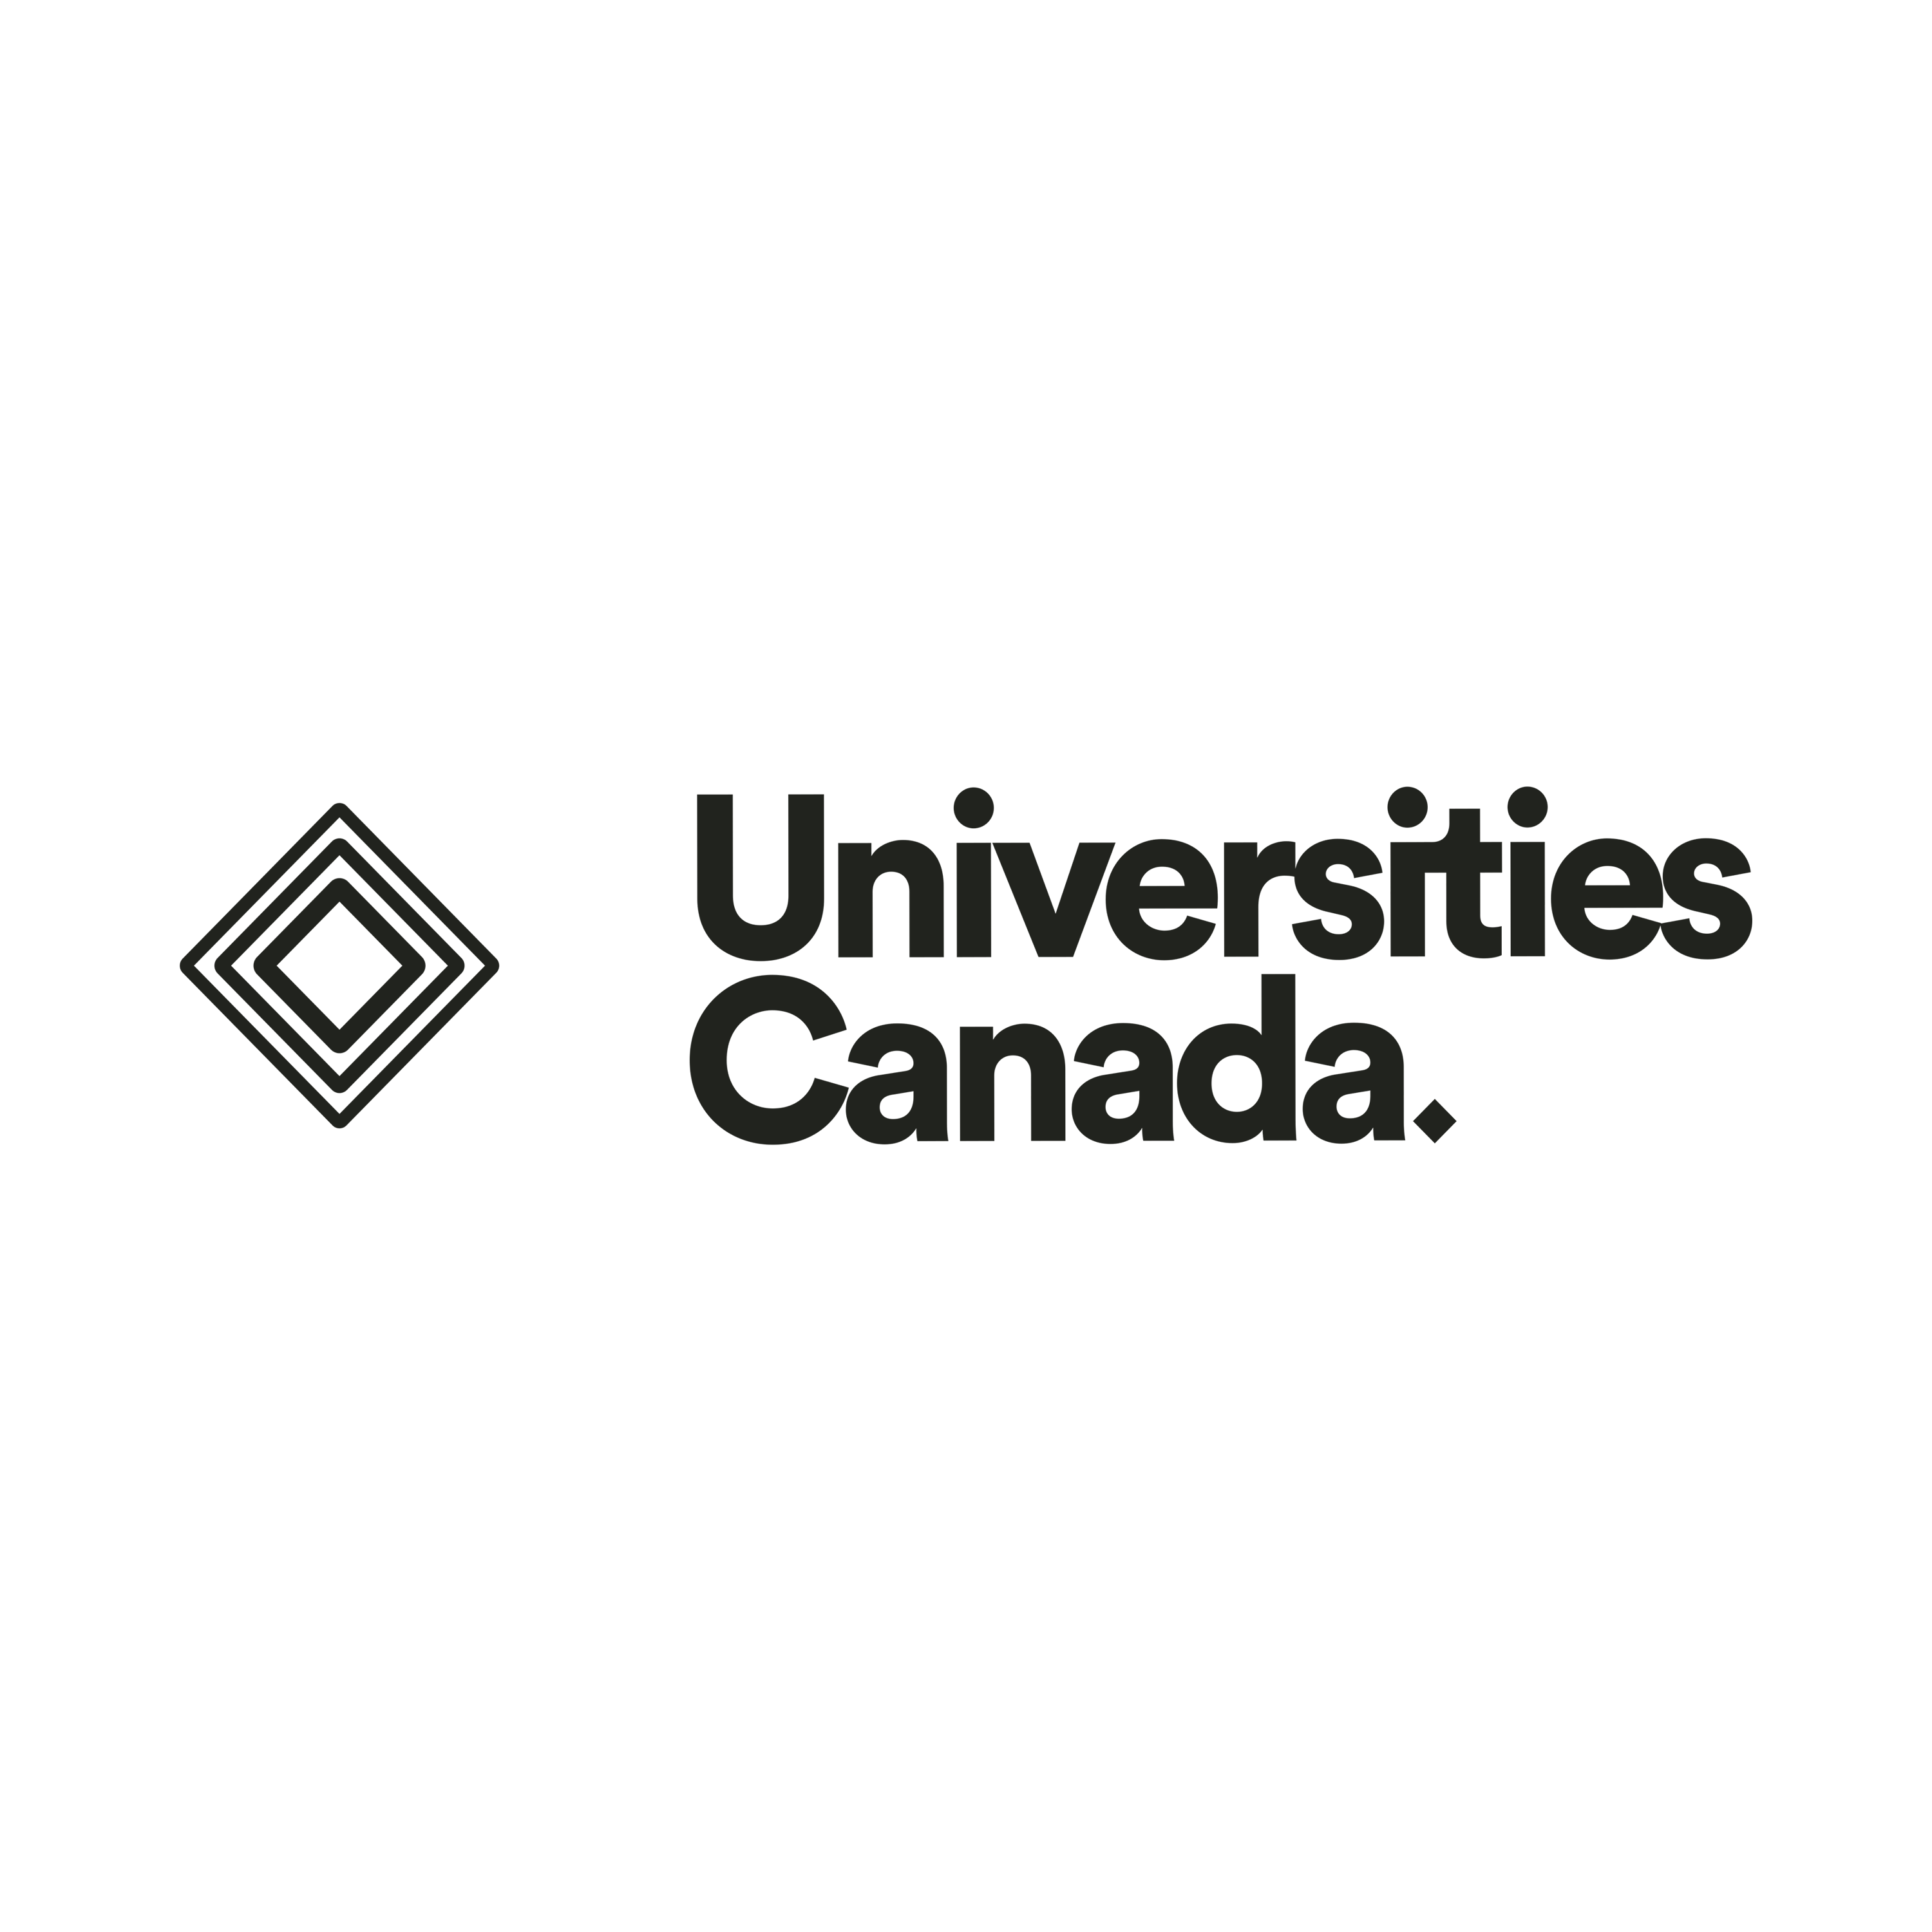 Universities Canada logo Transparent Photo